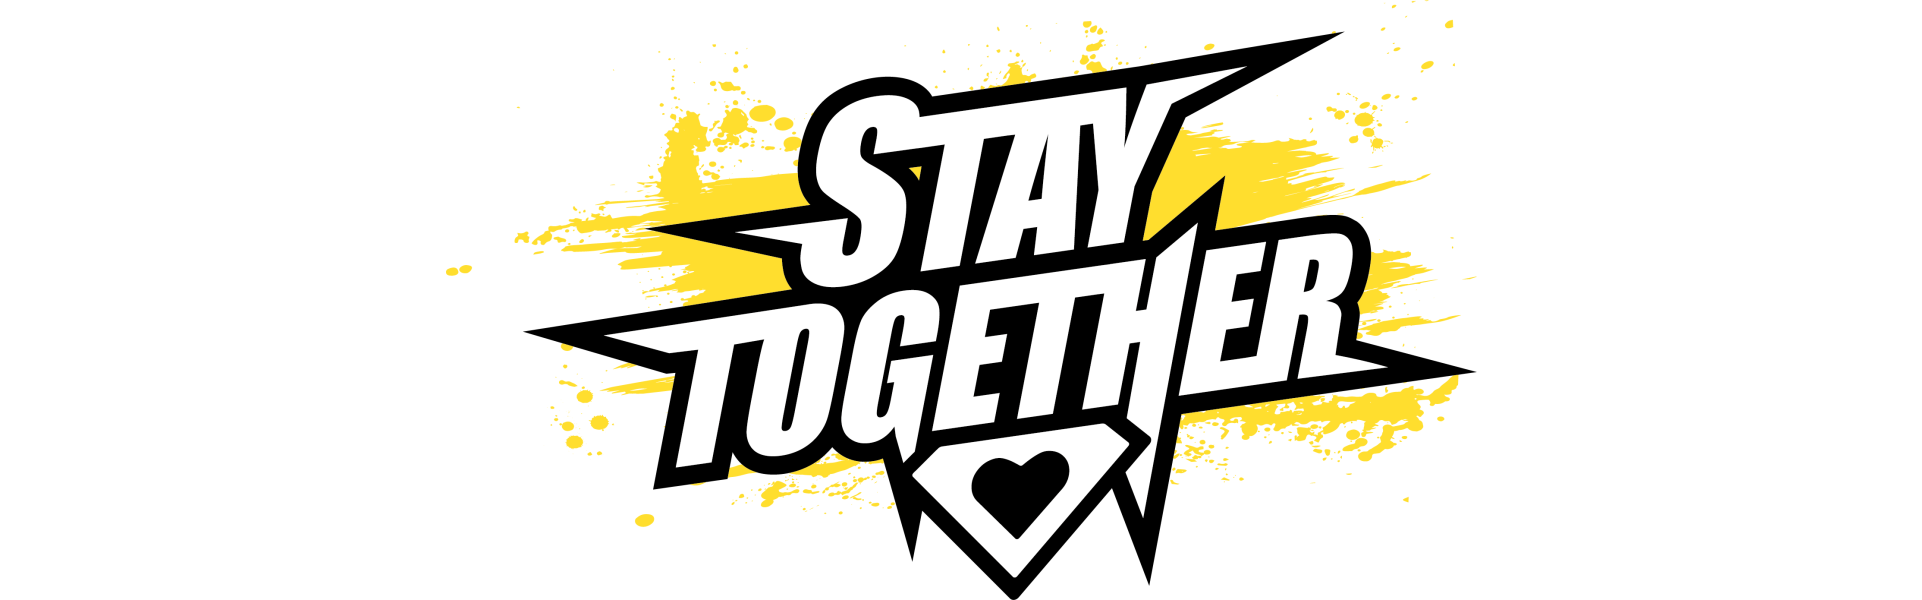  Was ist #StayTogether?   
&bdquo;Stay...